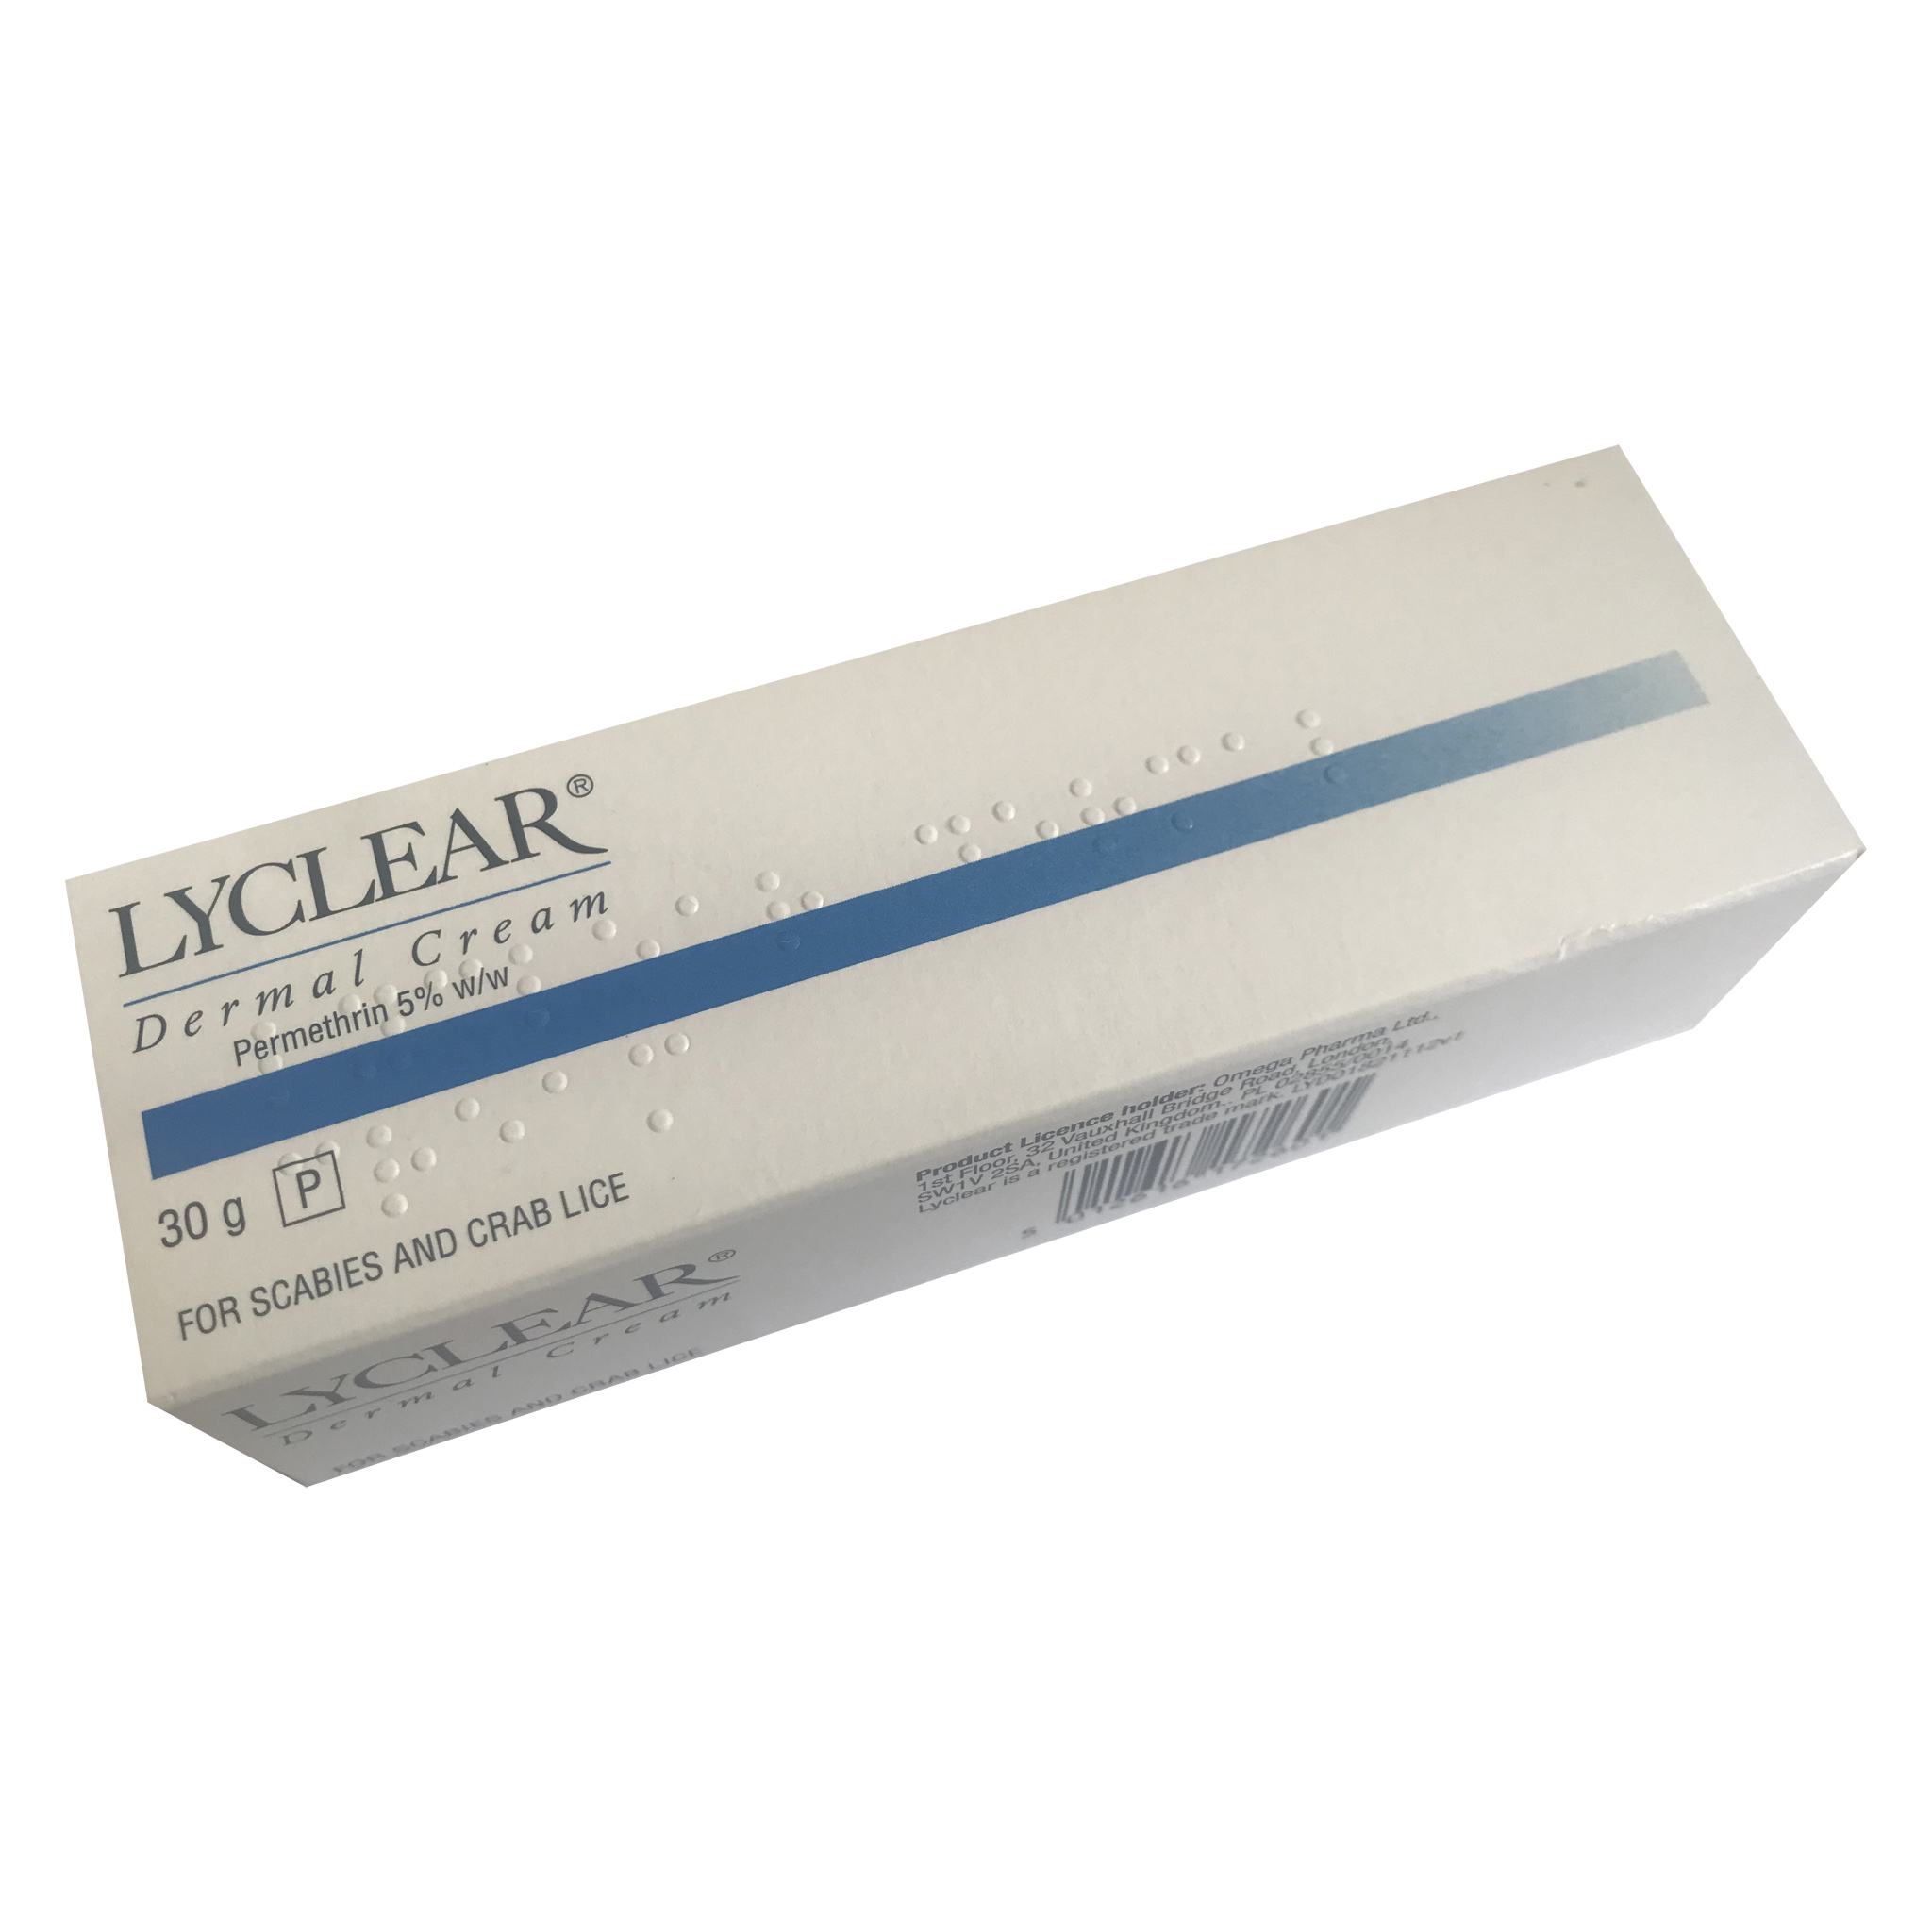 Lyclear Dermal Cream (30g) - 2 Packs